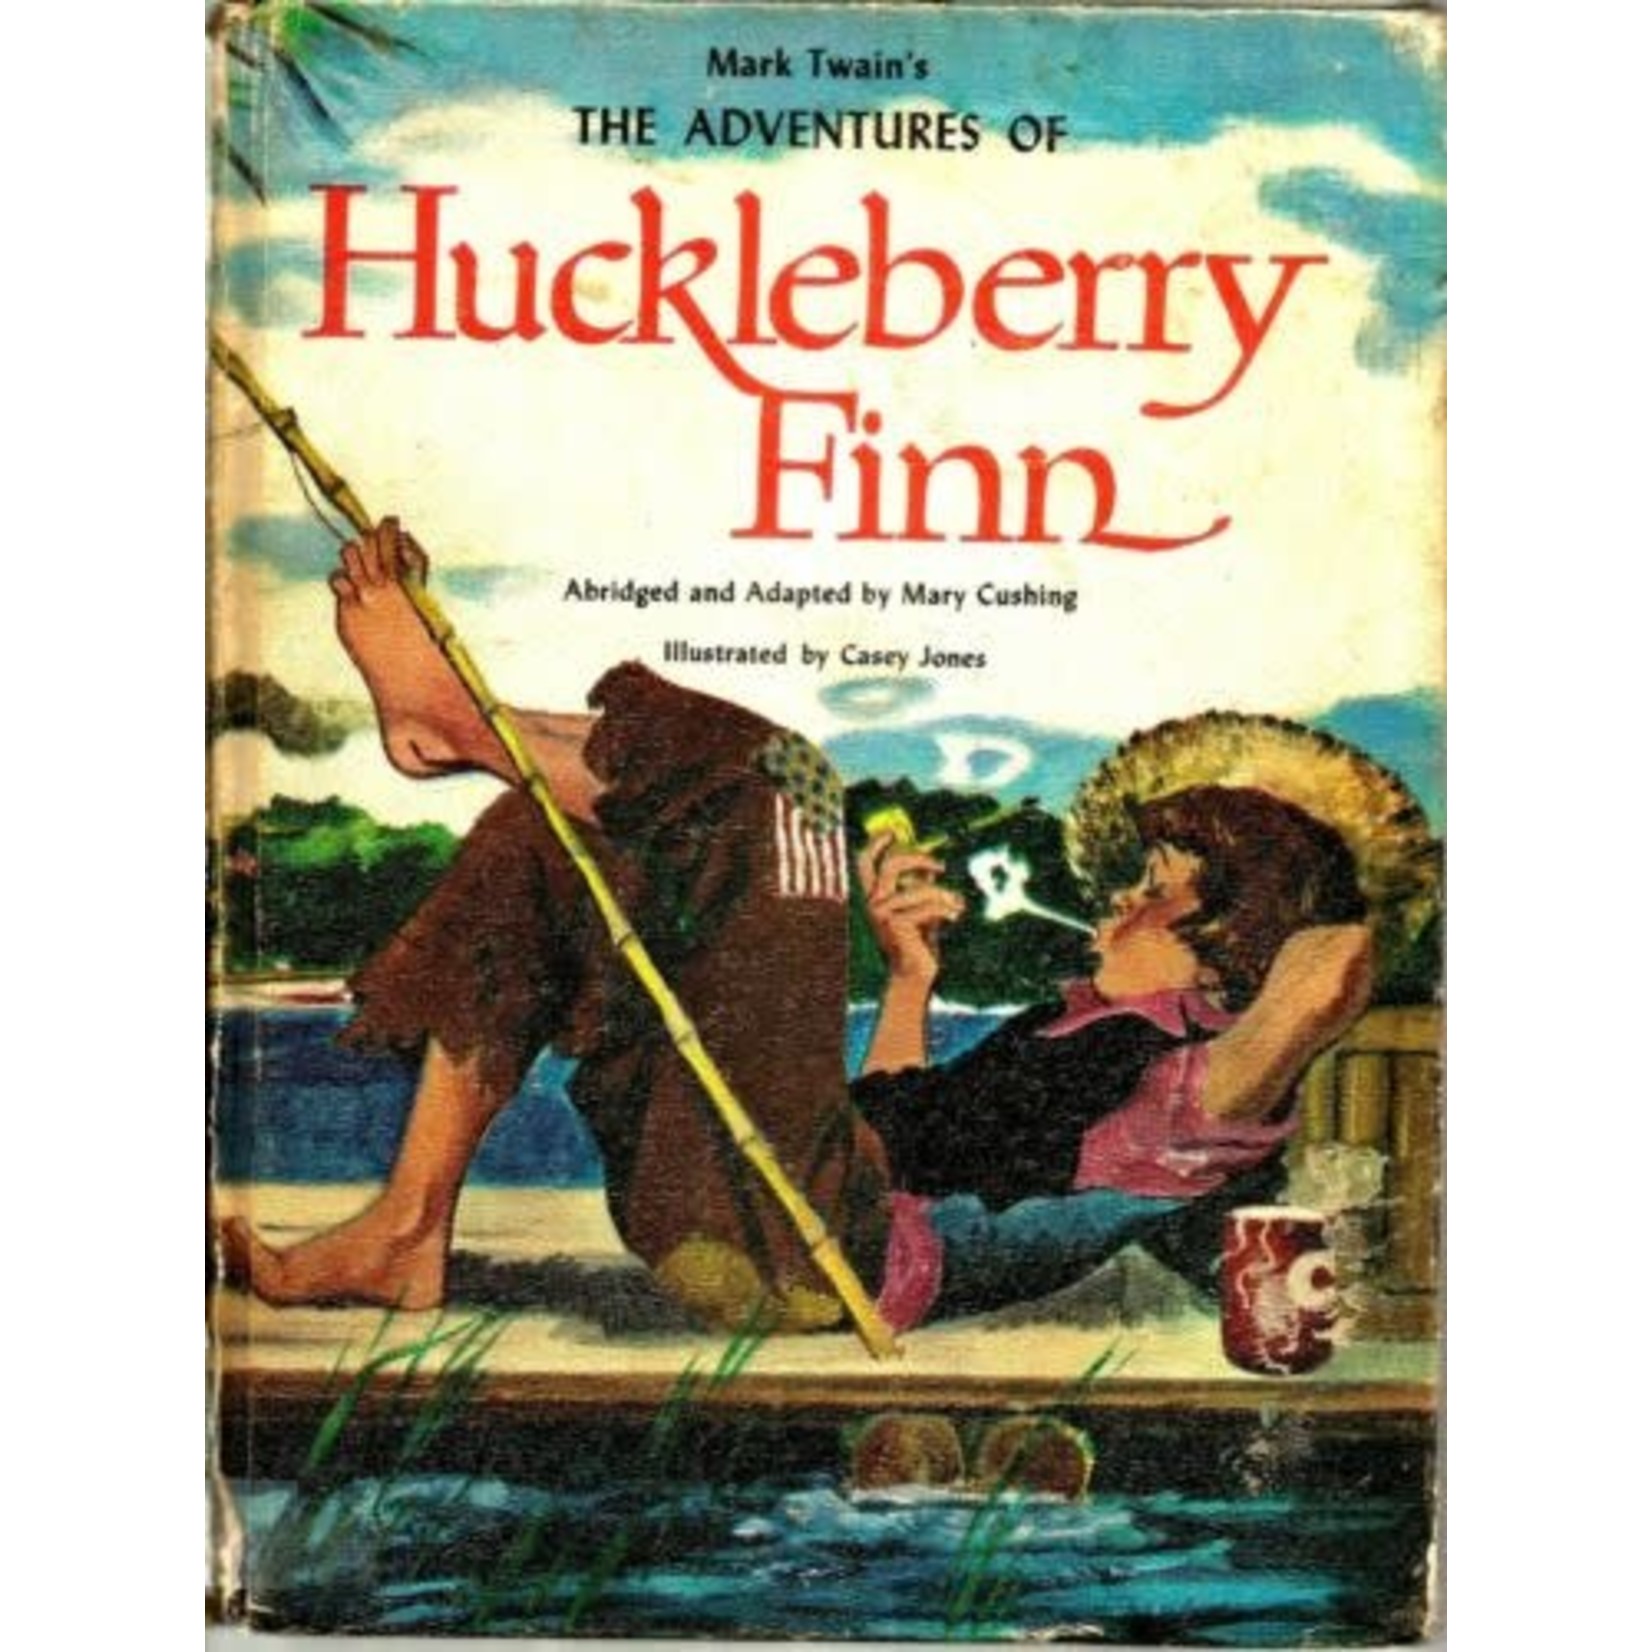 Mark Twain's - The Adventures of Huckleberry Finn (Abridged and Adapted by Mary Cushing)